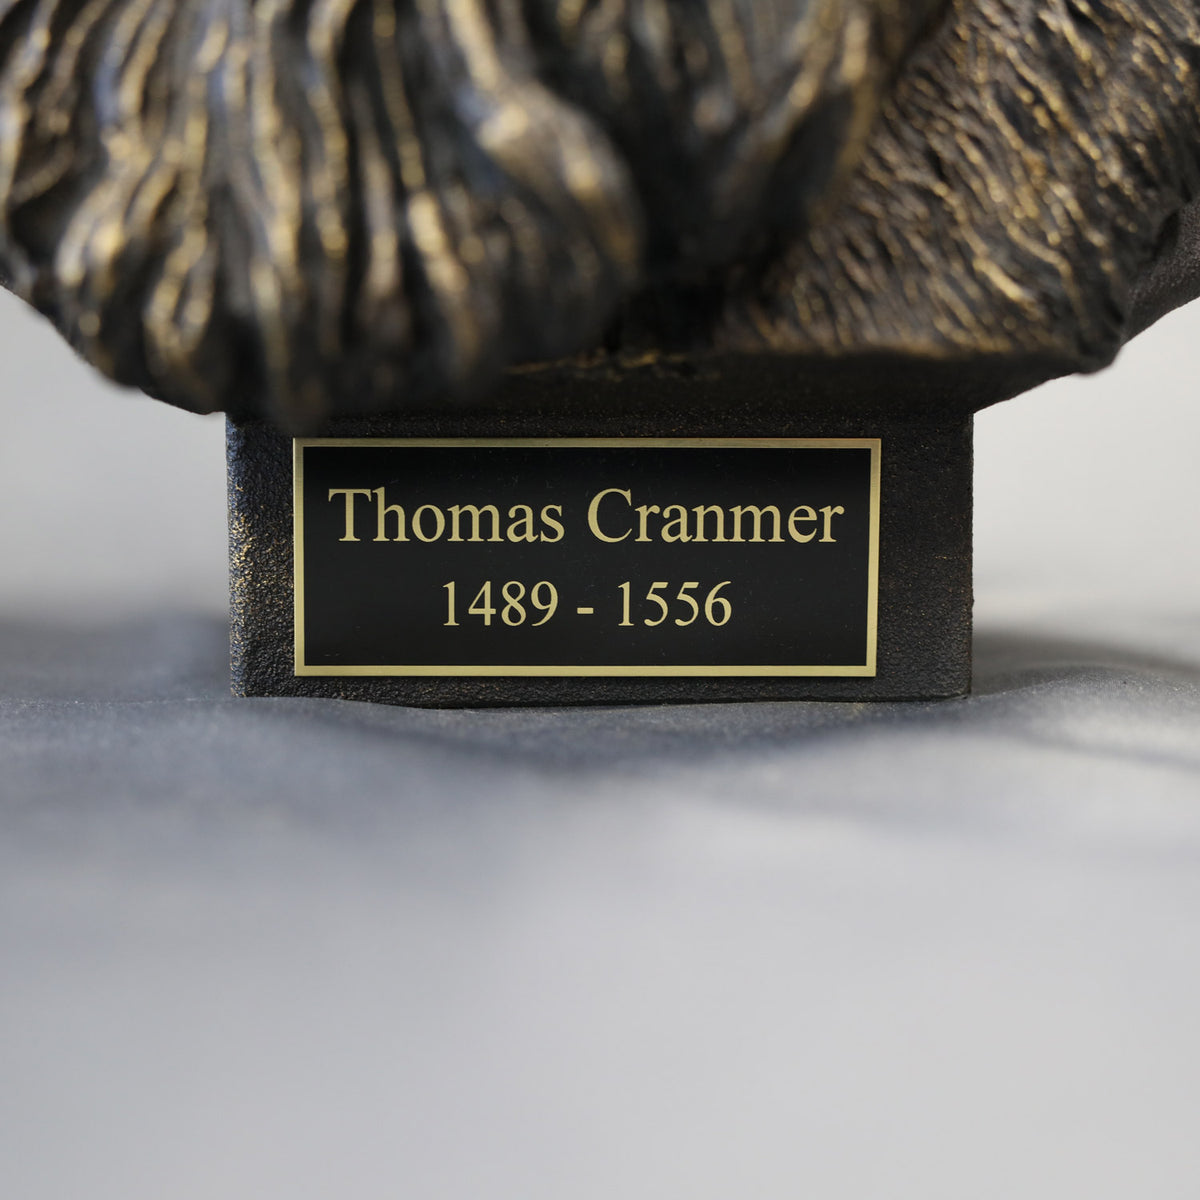 Thomas Cranmer - Sculpture